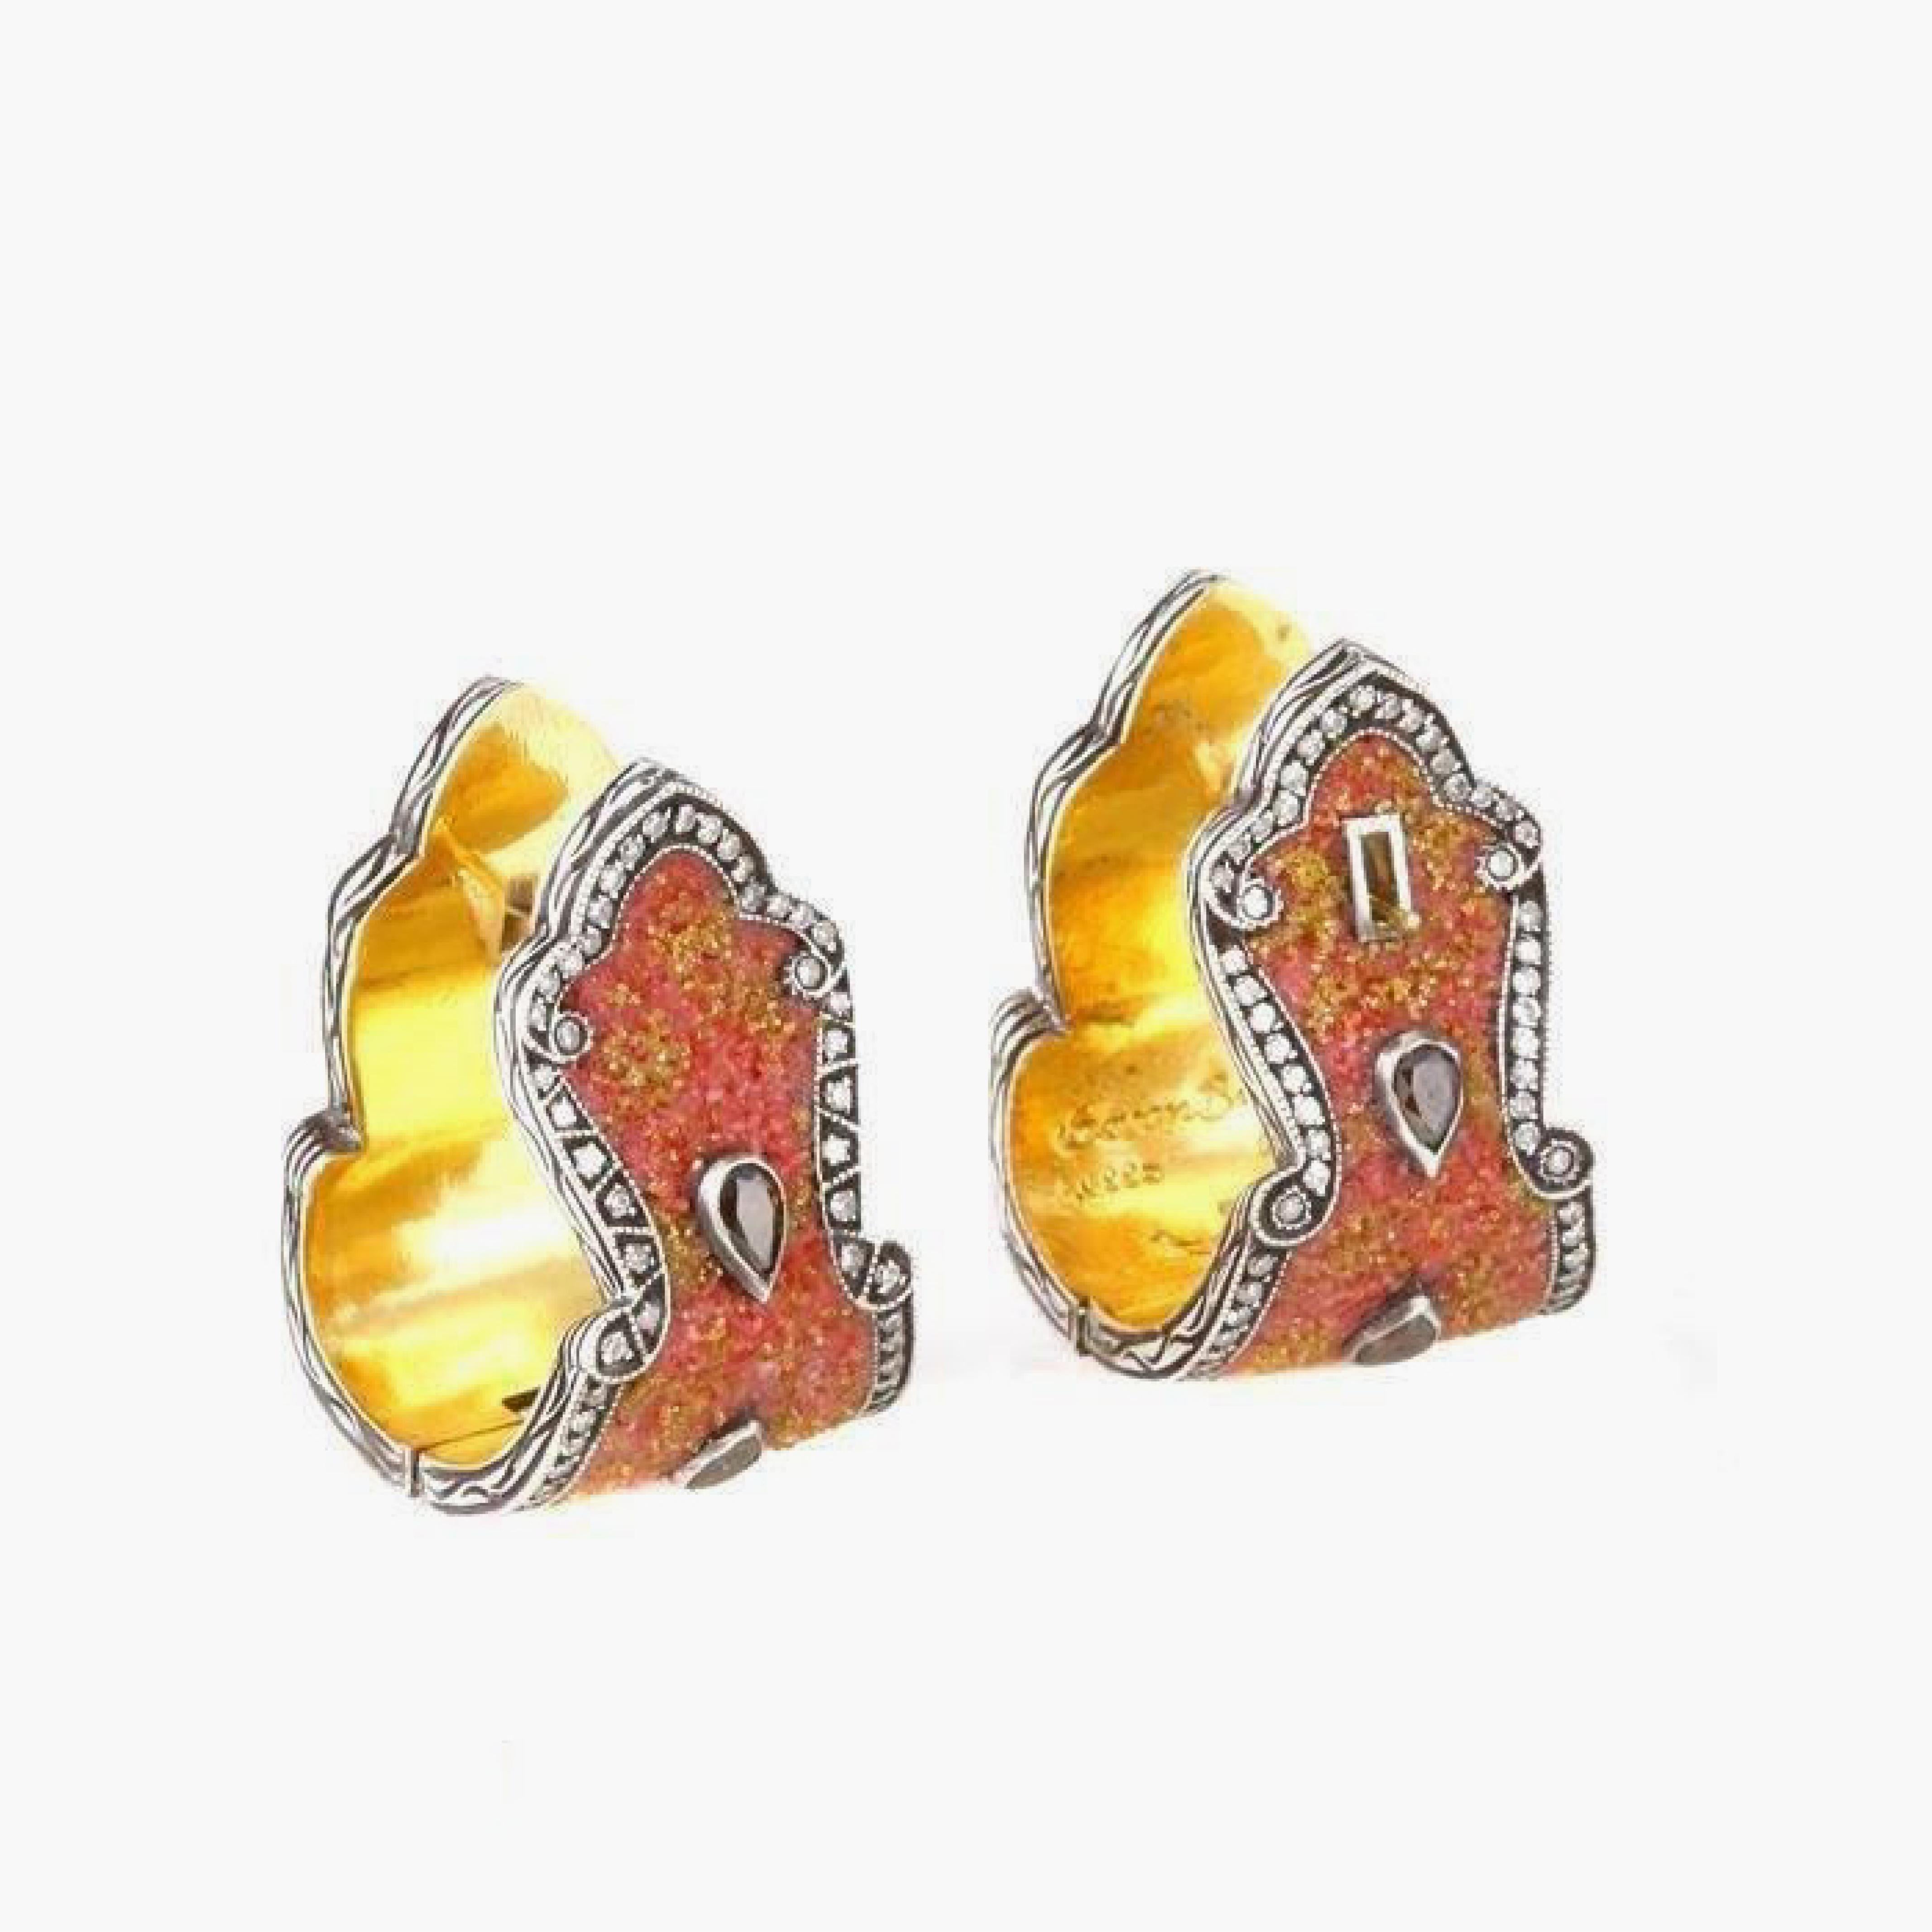 Brilliant Cut Sevan Biçakçi Carnelian and Diamonds Micro Mosaic Earrings in 24K Gold For Sale